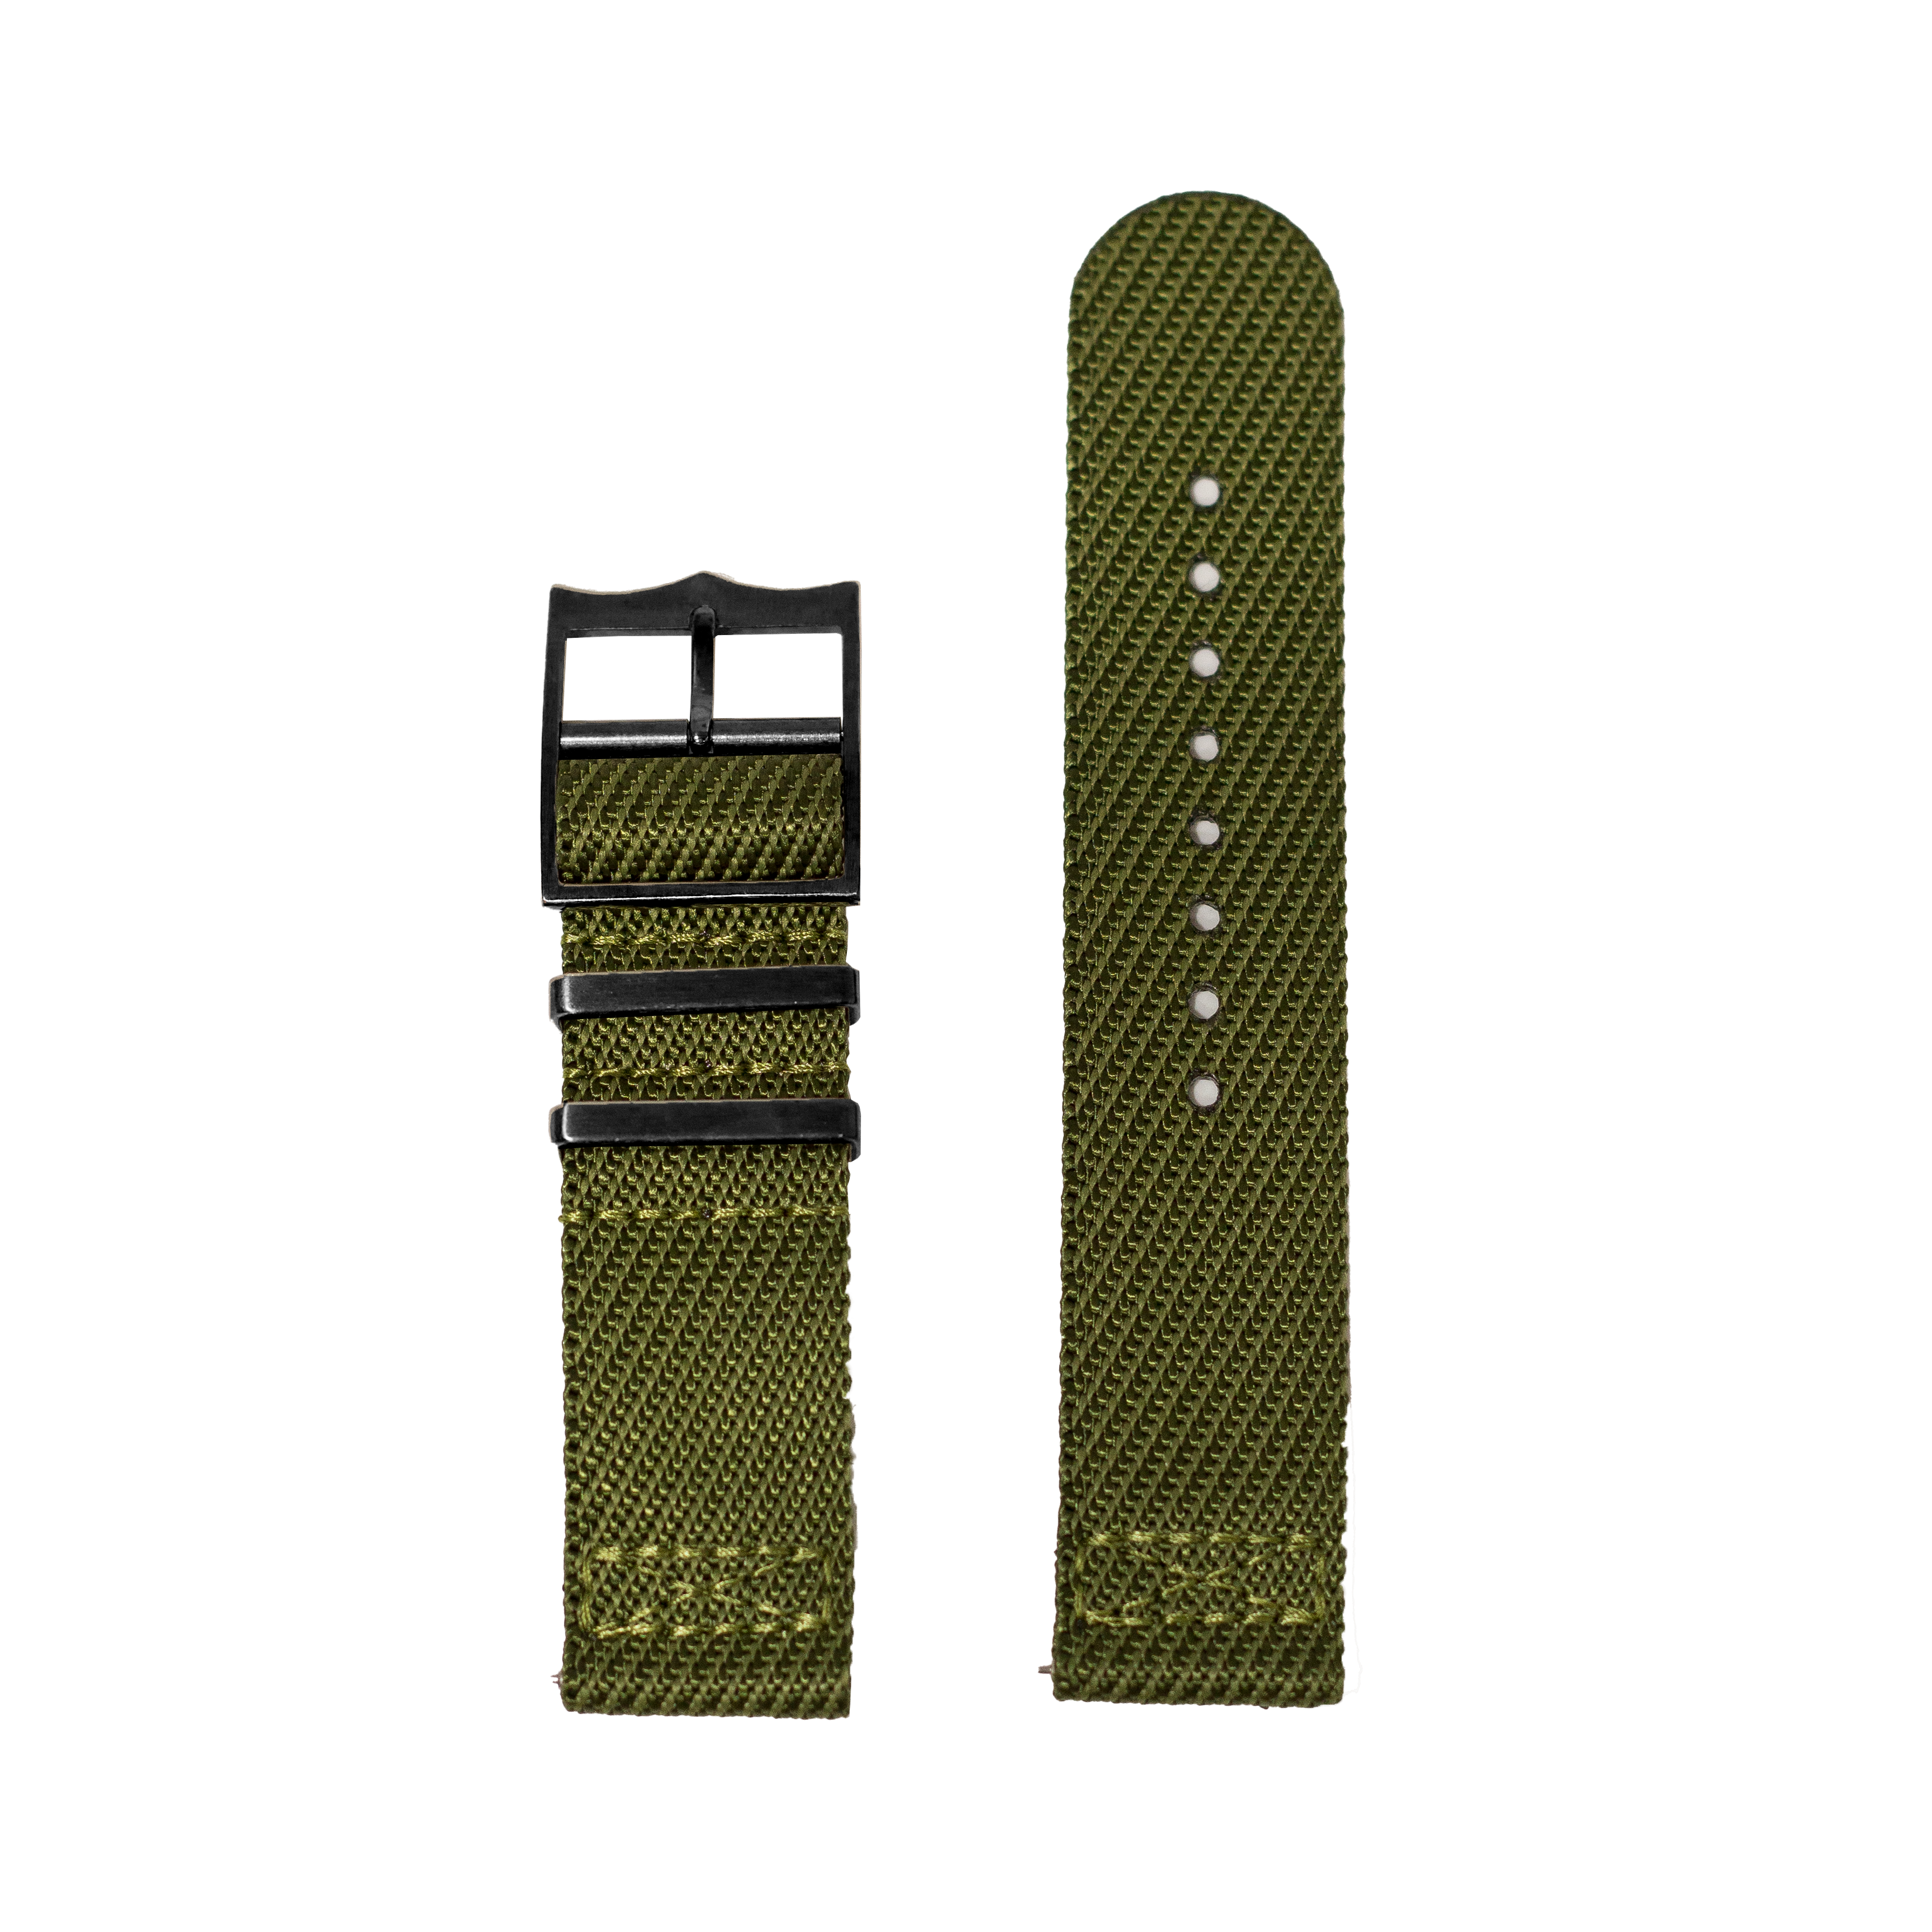 [QuickFit] Cross Militex - Army Green [Black Hardware] 26mm